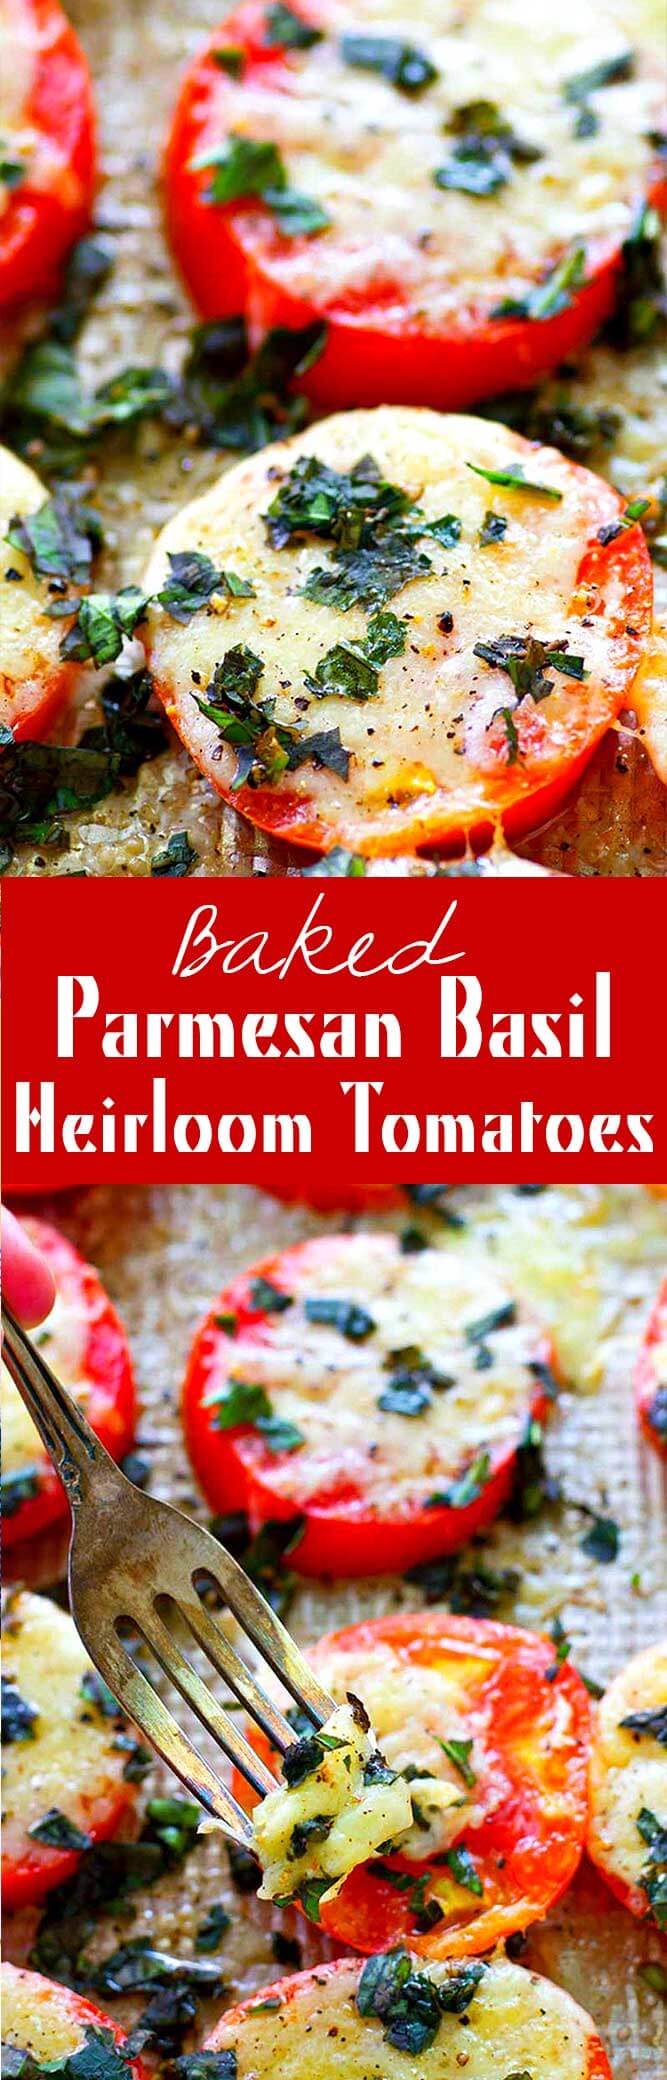 Basked Parmesan Basil Heirloom Tomatoes